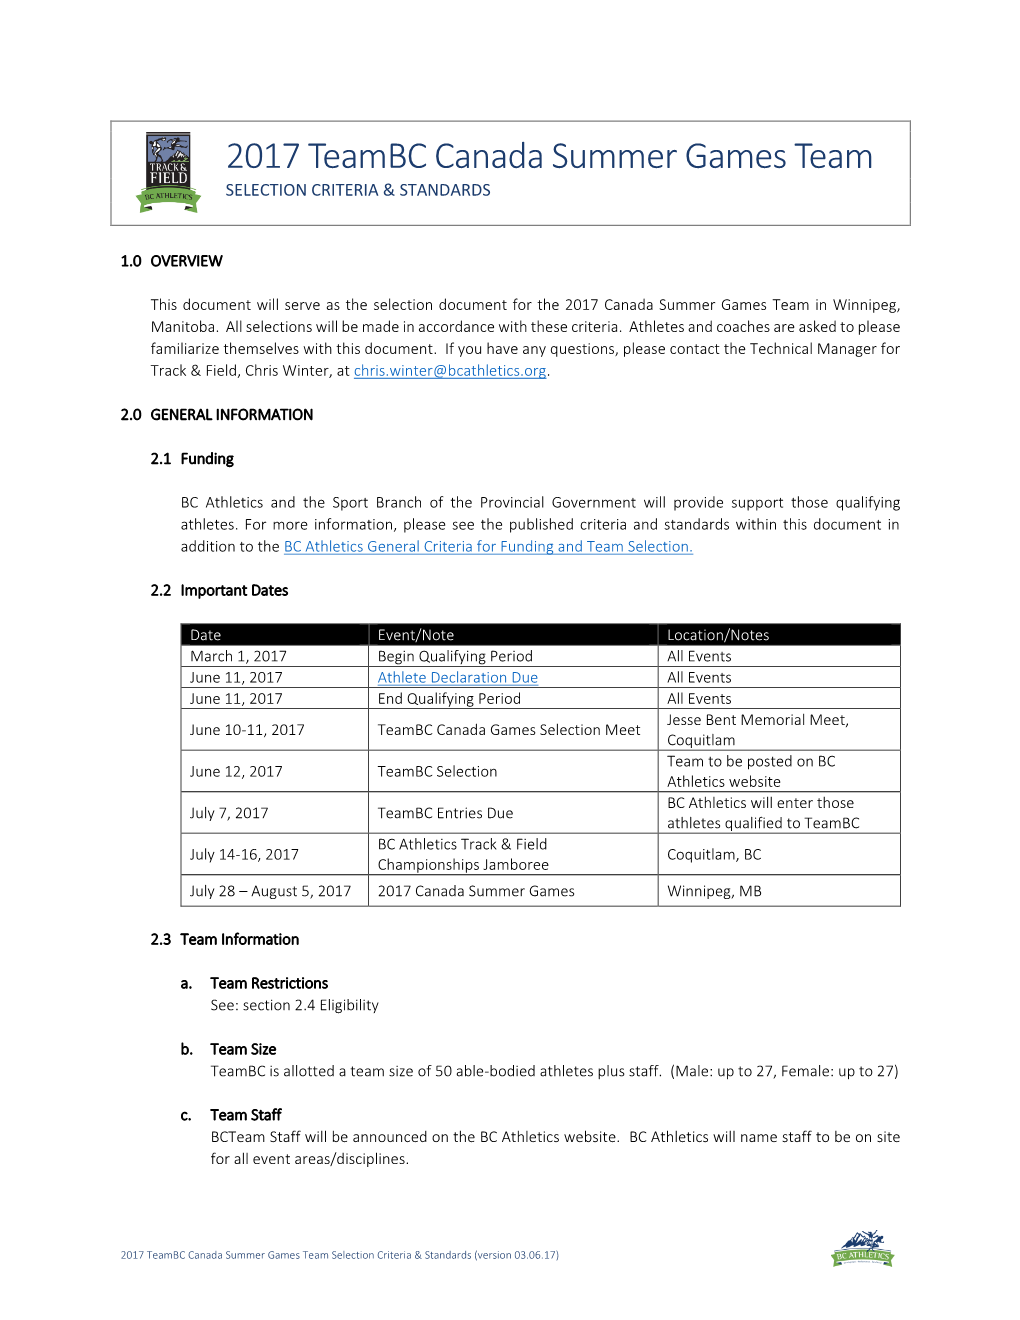 2017 Teambc Canada Summer Games Team SELECTION CRITERIA & STANDARDS